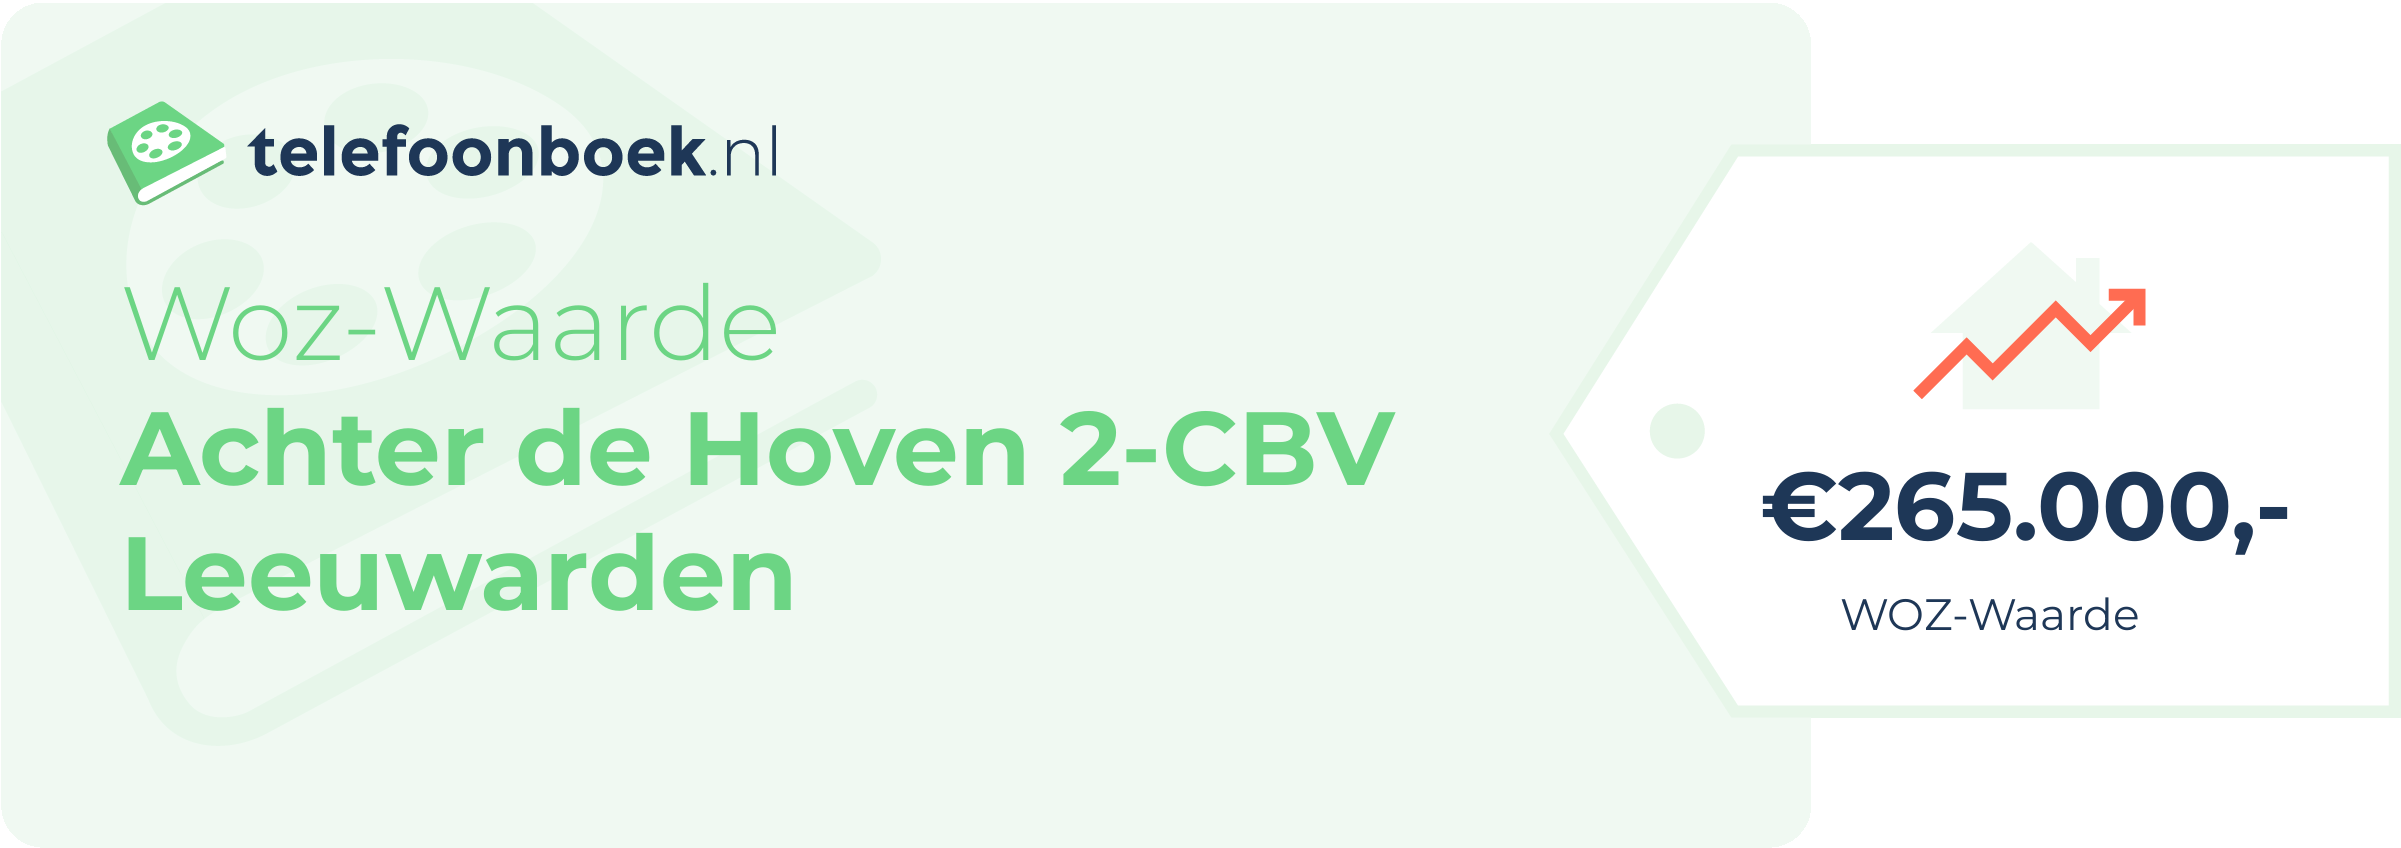 WOZ-waarde Achter De Hoven 2-CBV Leeuwarden